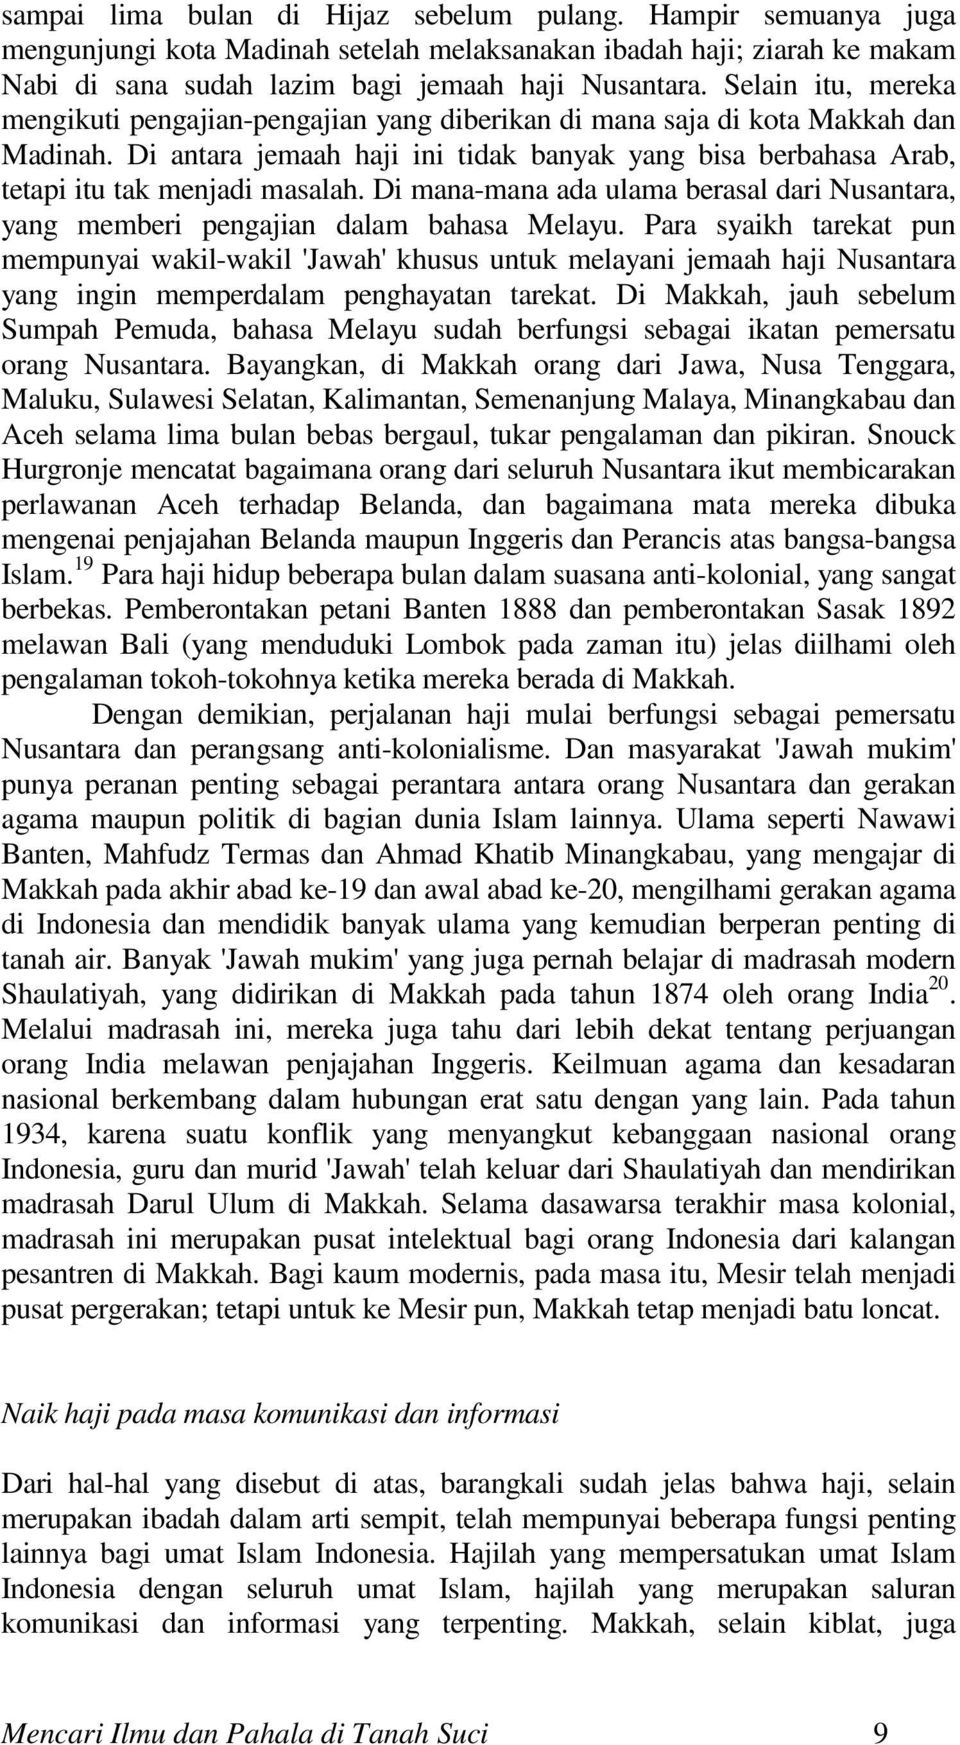 Di antara jemaah haji ini tidak banyak yang bisa berbahasa Arab, tetapi itu tak menjadi masalah. Di mana-mana ada ulama berasal dari Nusantara, yang memberi pengajian dalam bahasa Melayu.